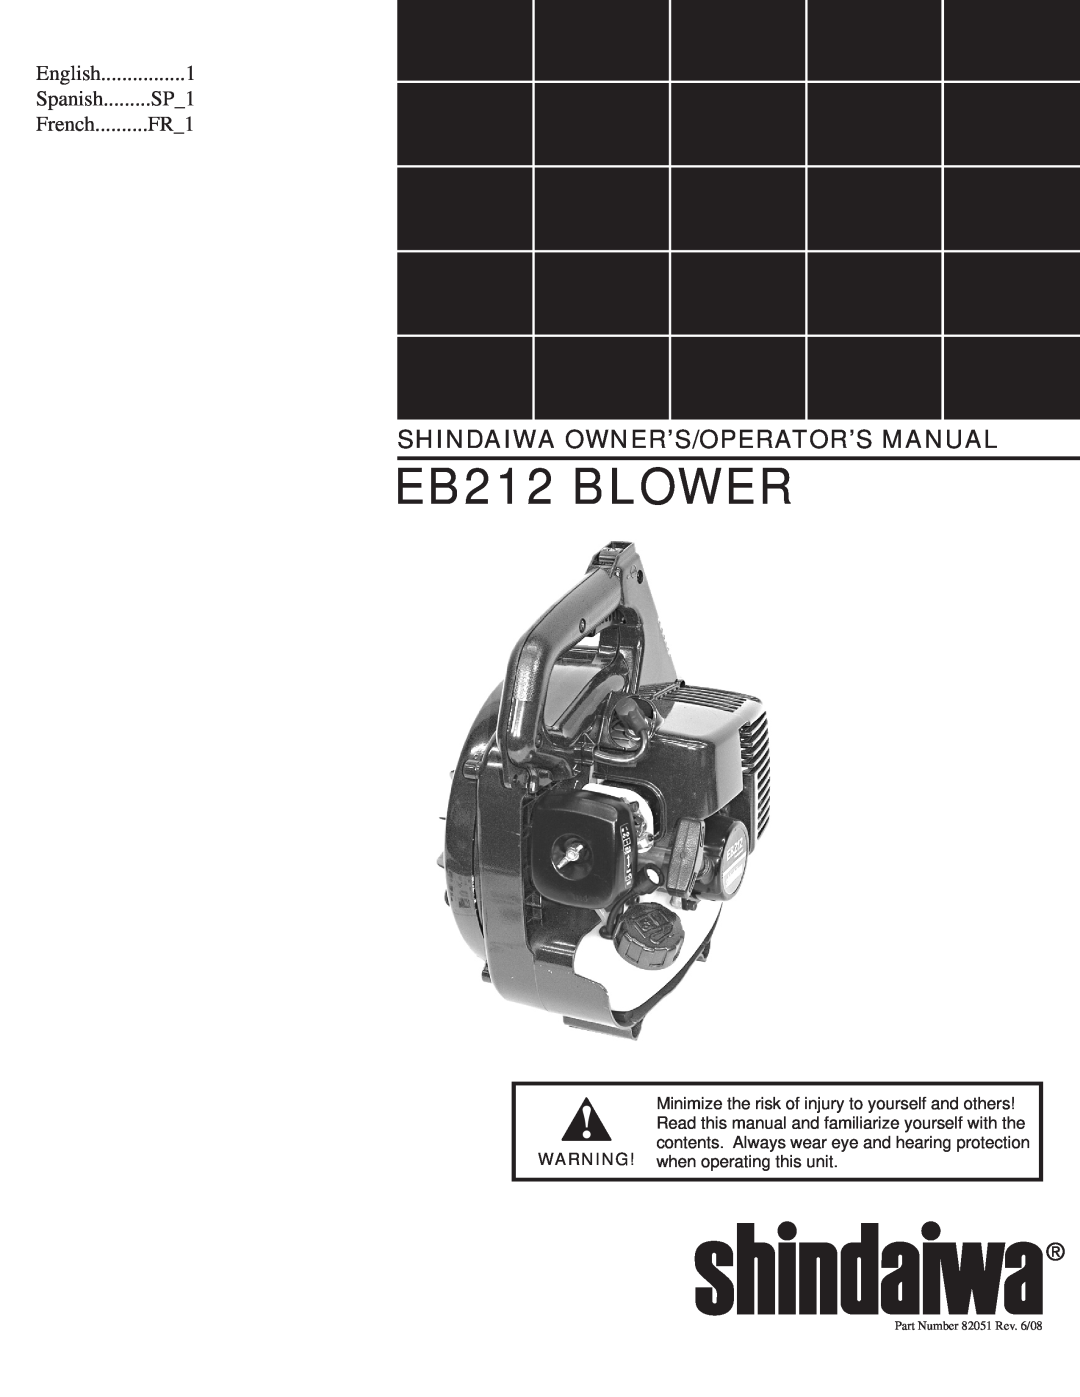 Shindaiwa 82051 manual EB212 BLOWER, Shindaiwa Owner’S/Operator’S Manual, Spanish, SP_1, French, FR_1, English 